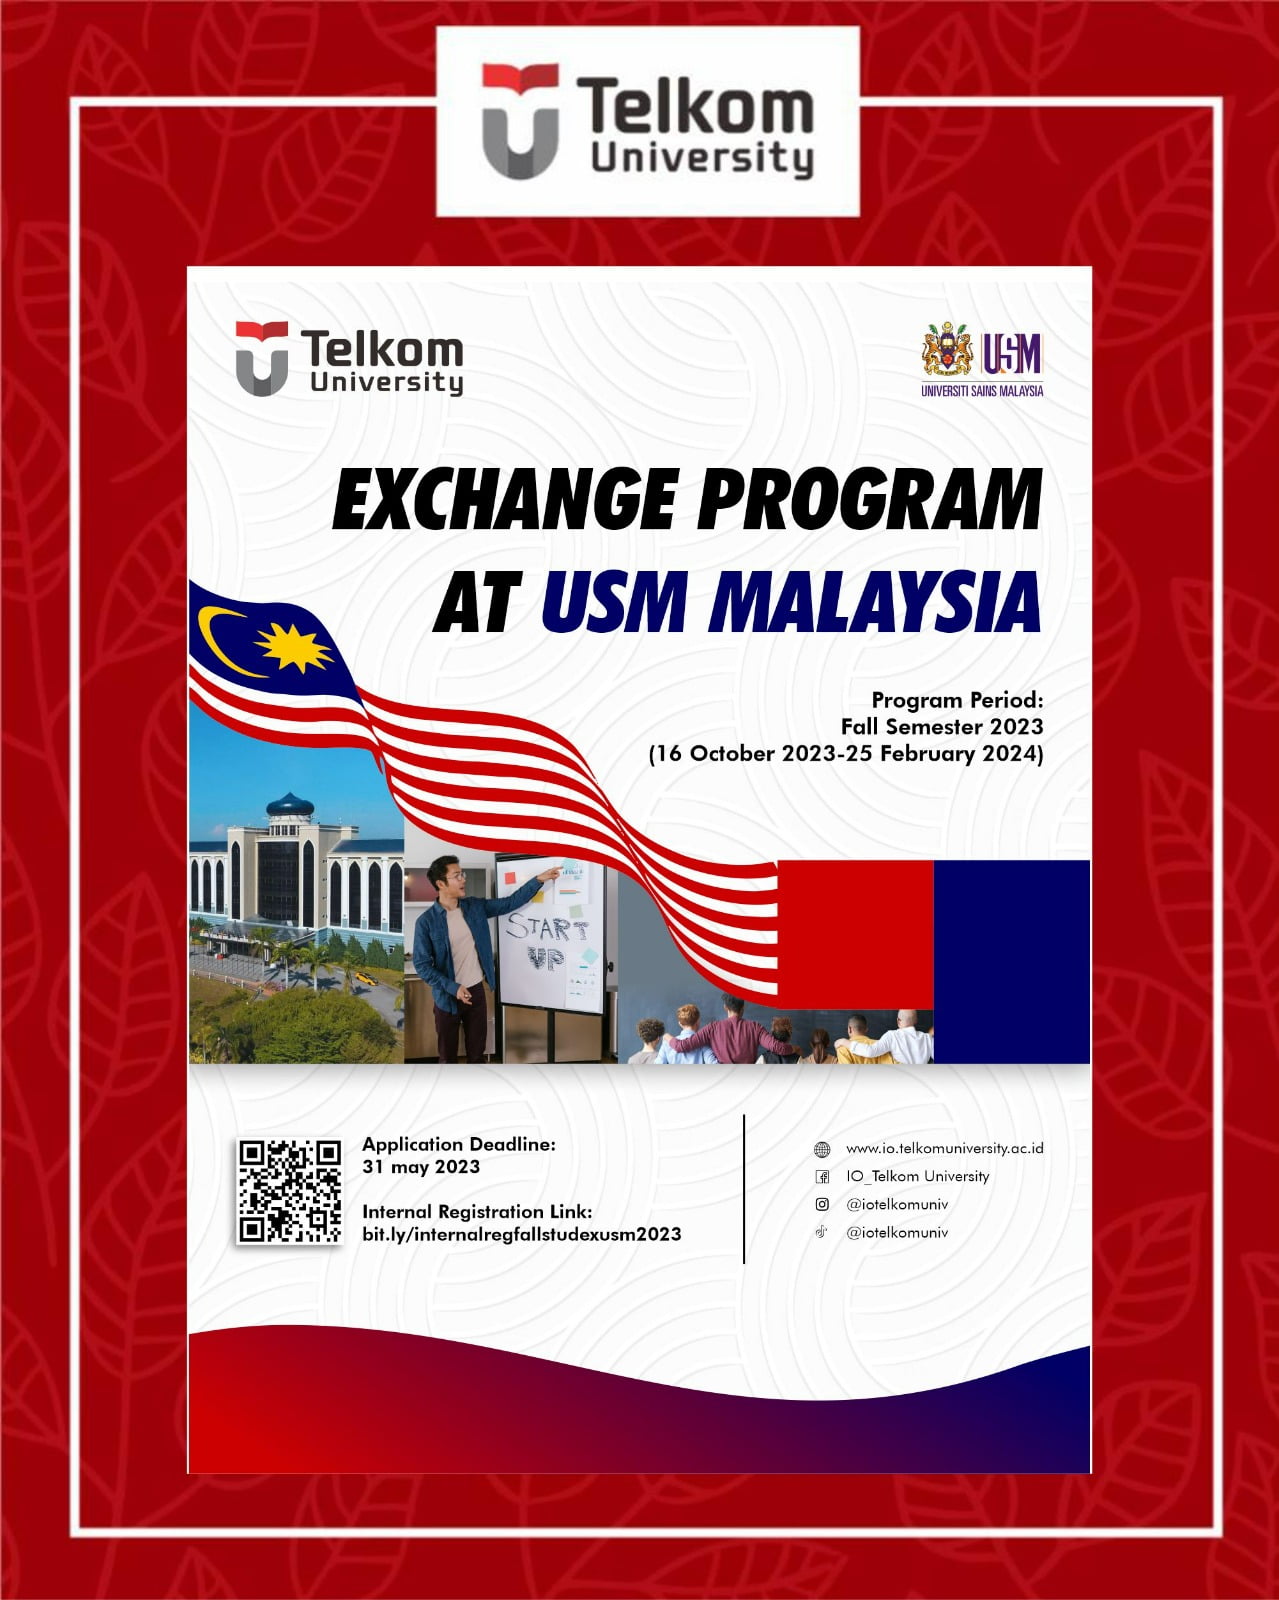 USM Exchange Program for Fall Semester 2023 is OPEN